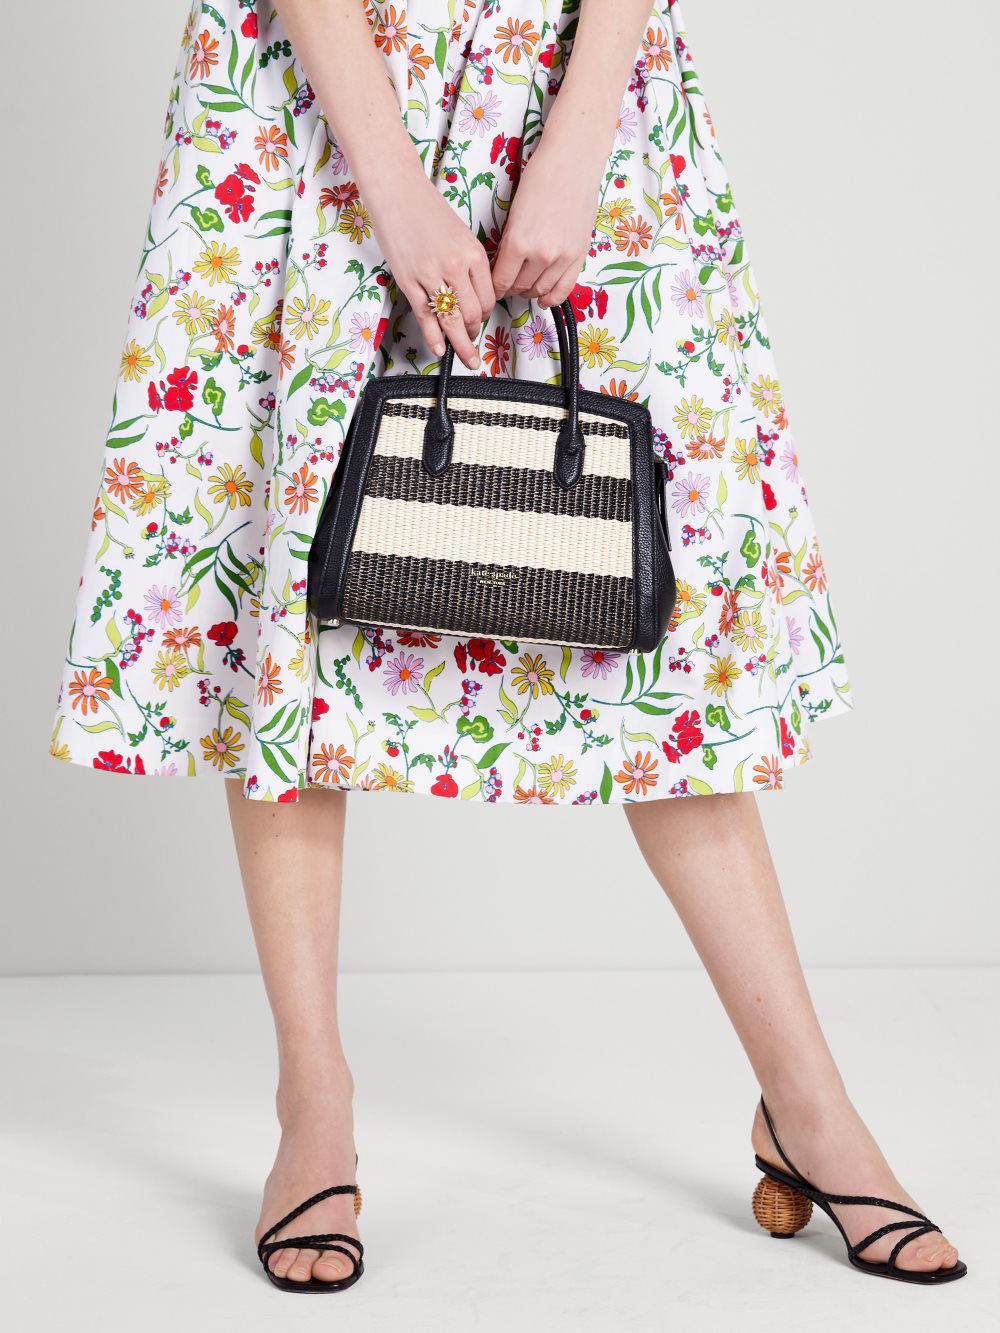 Women's black multi. knott striped straw medium satchel | Kate Spade